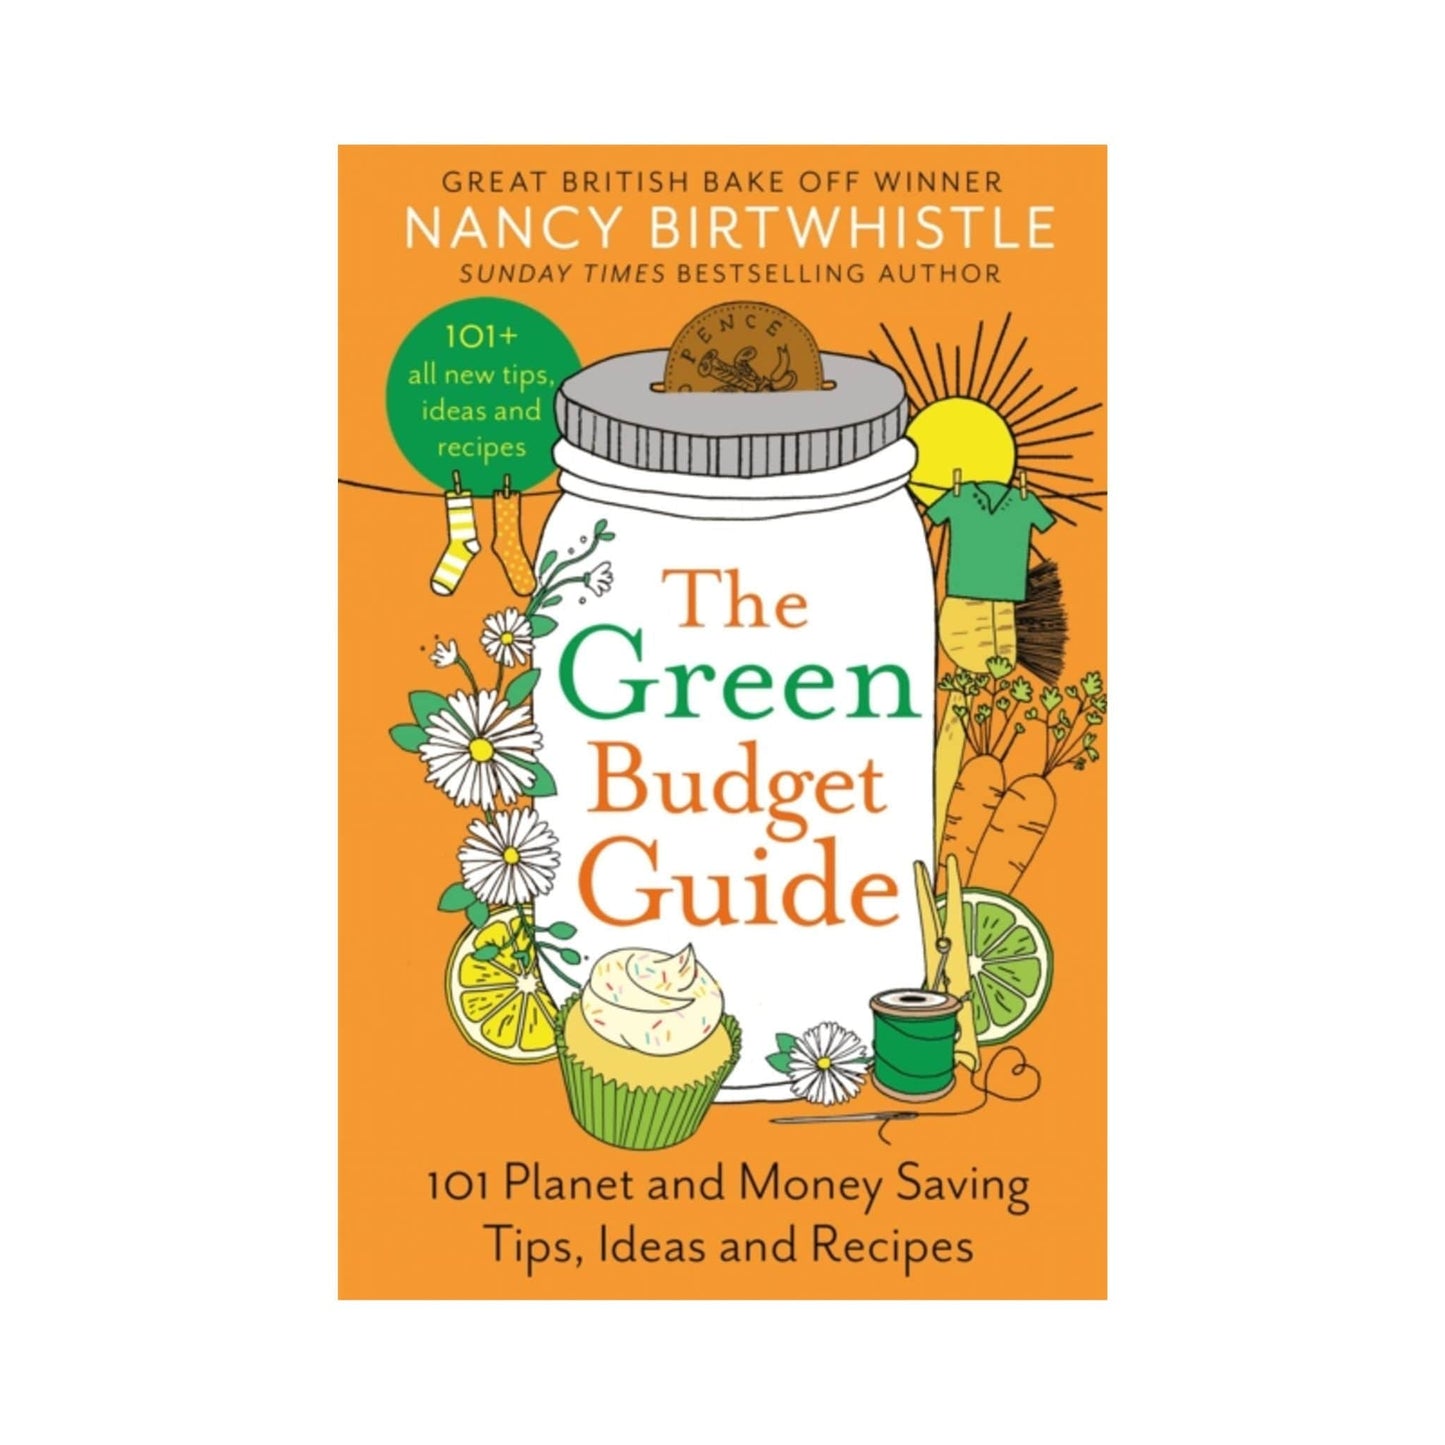 Our Bookshelf Print Books The Green Budget Guide - Nancy Birtwhistle